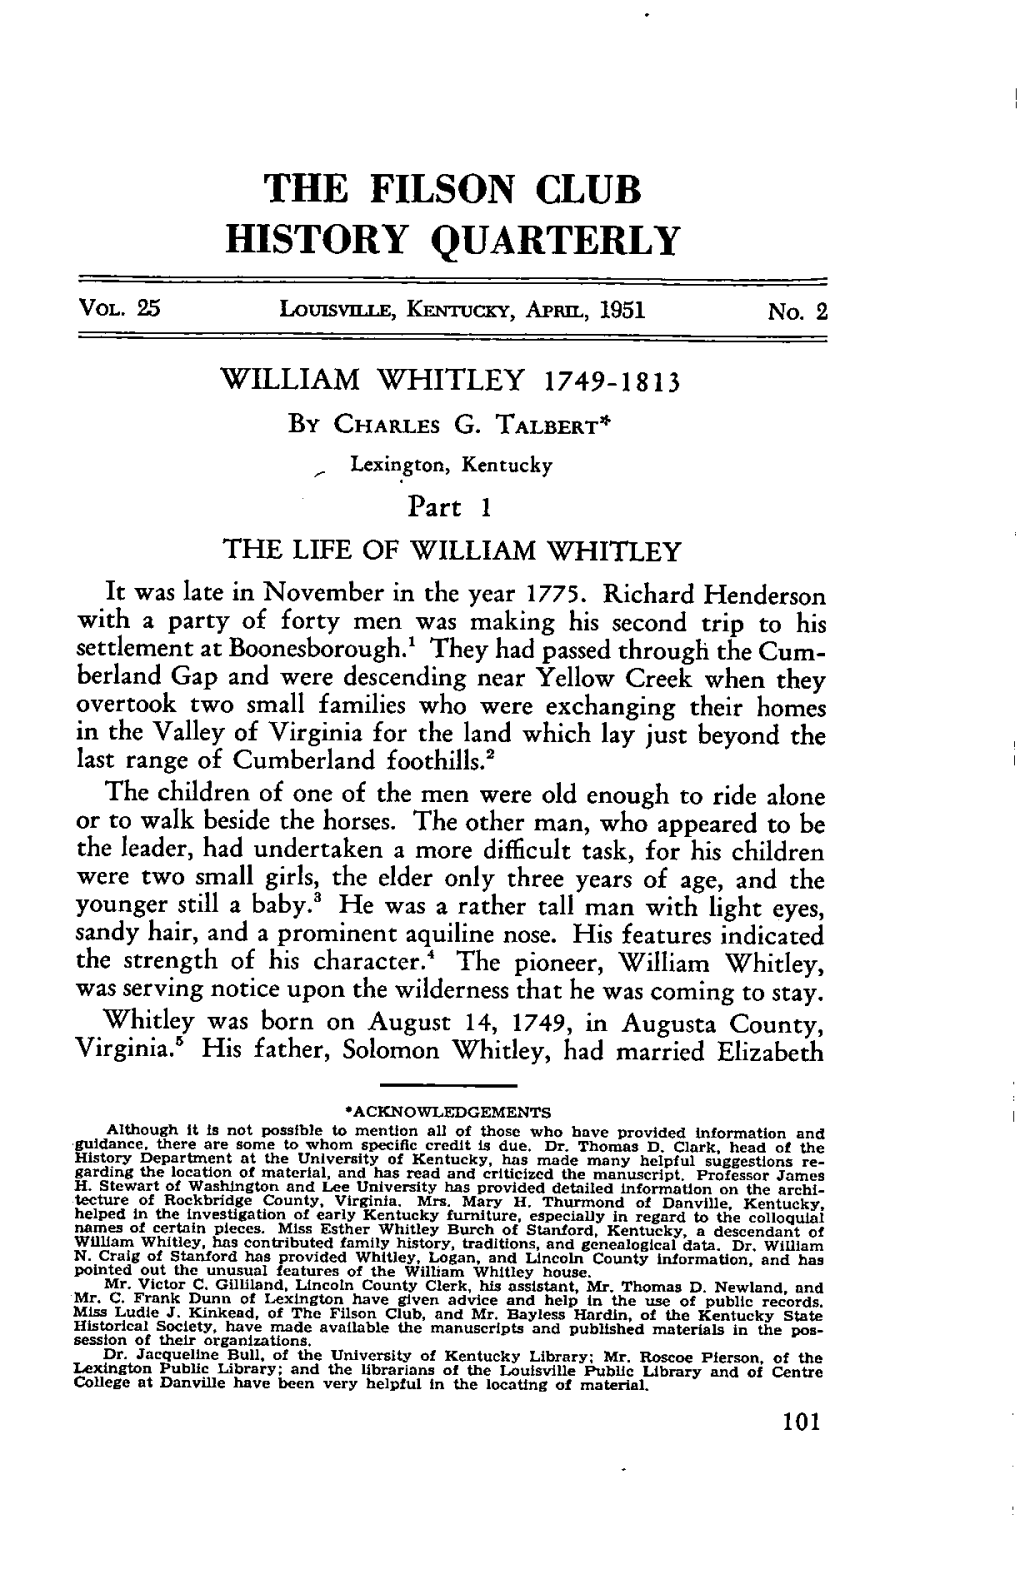 William Whitley 1749 1813